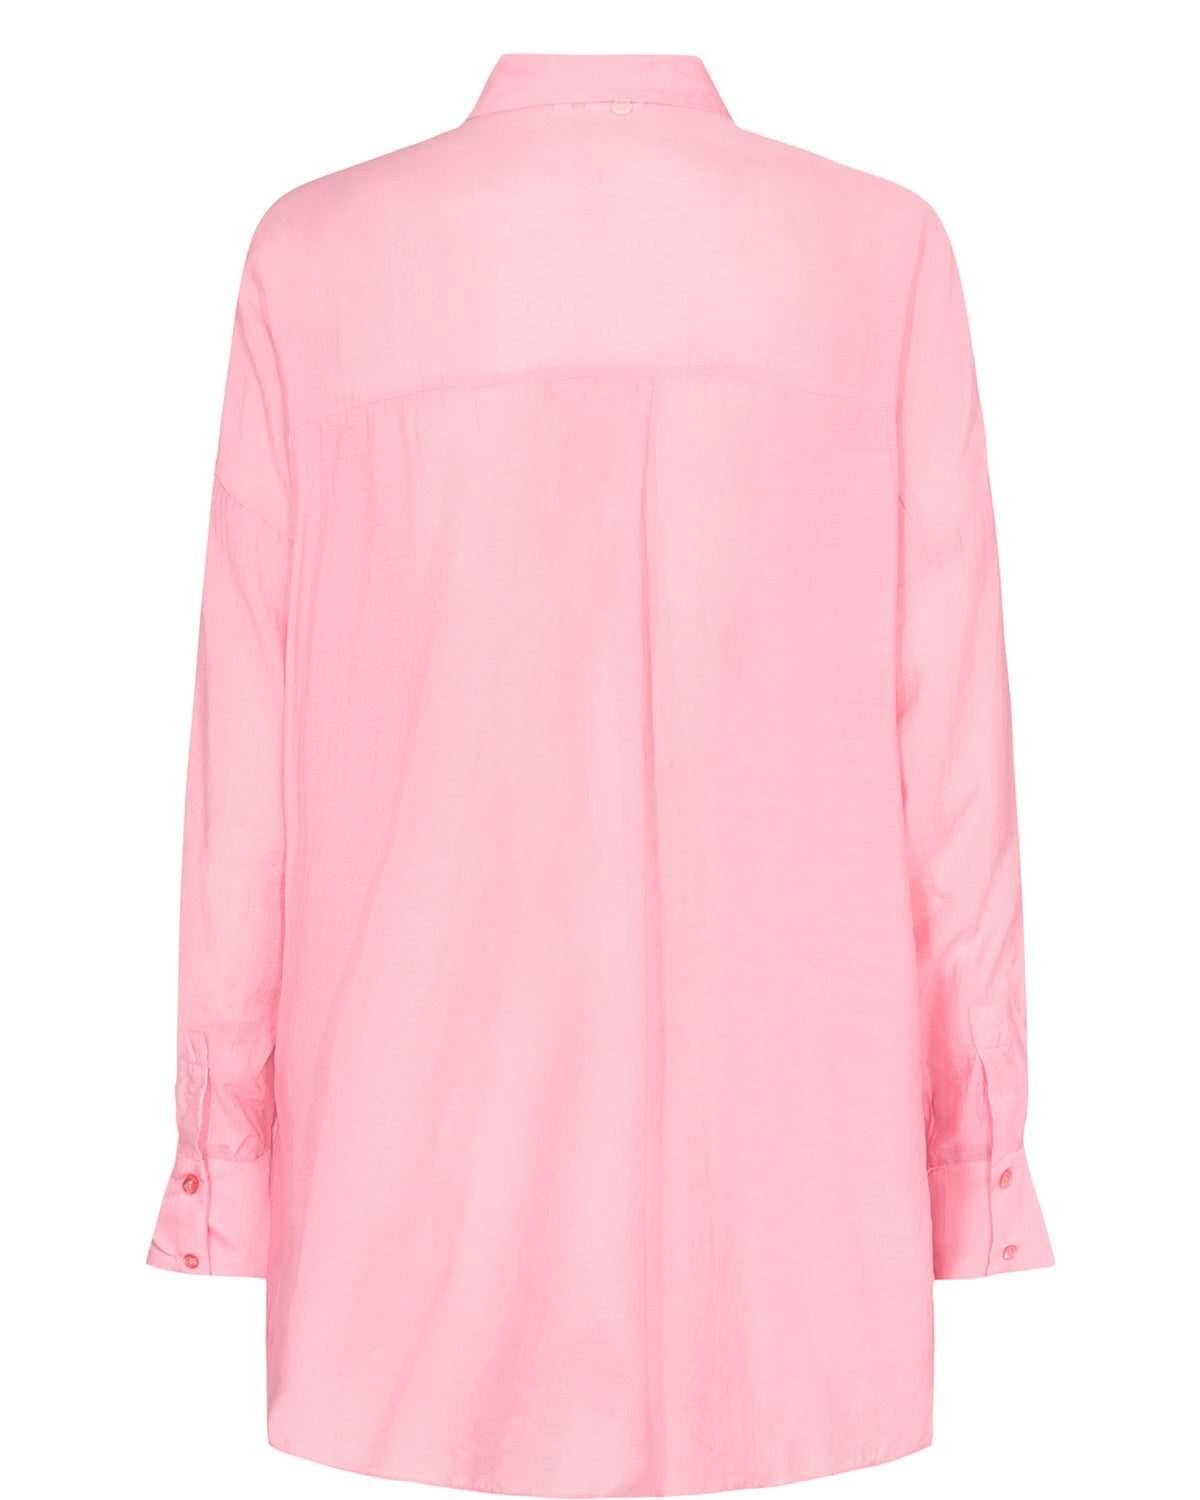 Numph Elinham Shirt - pink